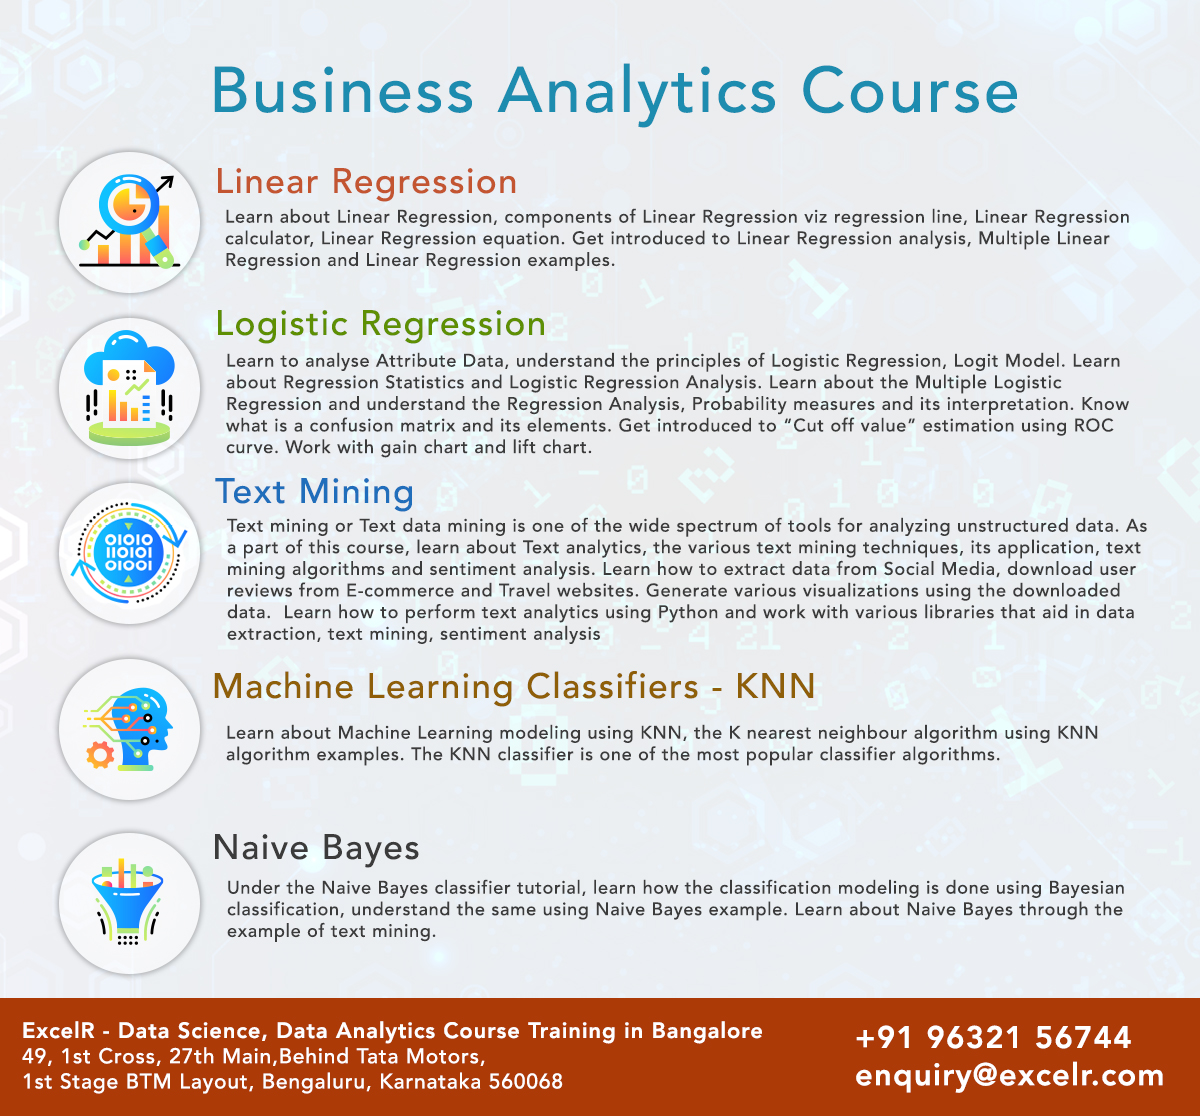 Business Analytics course, Bangalore, Karnataka, India